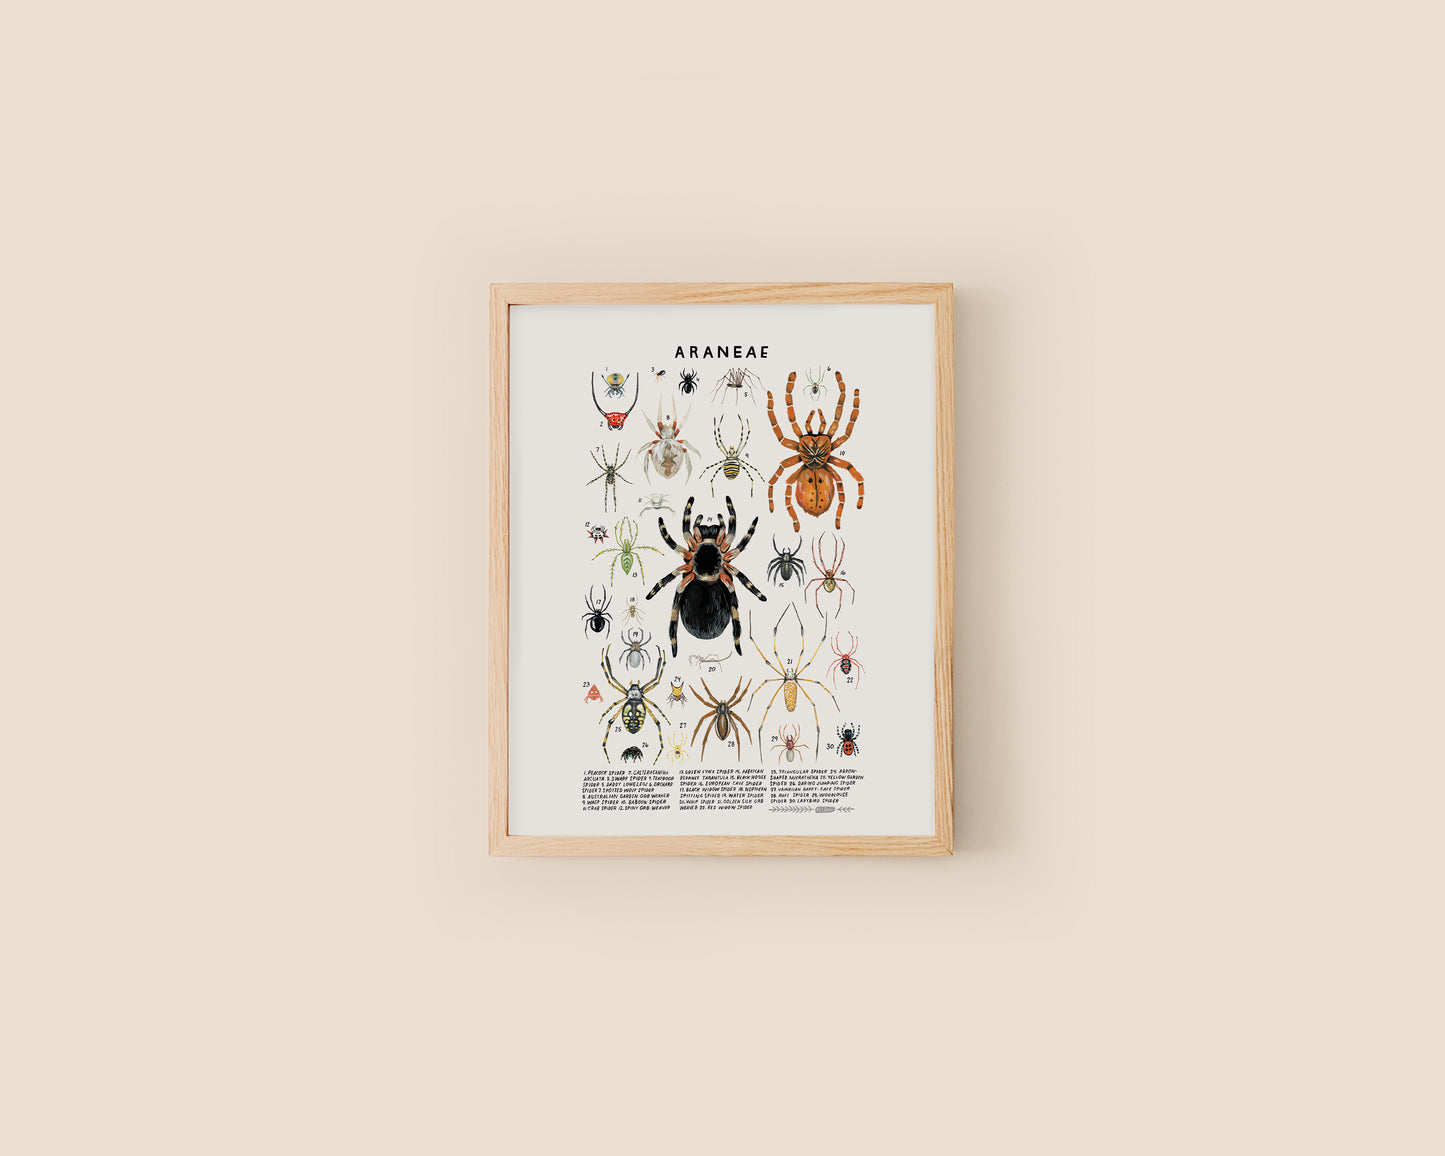 Spiders art print- Creatures of the Order Araneae